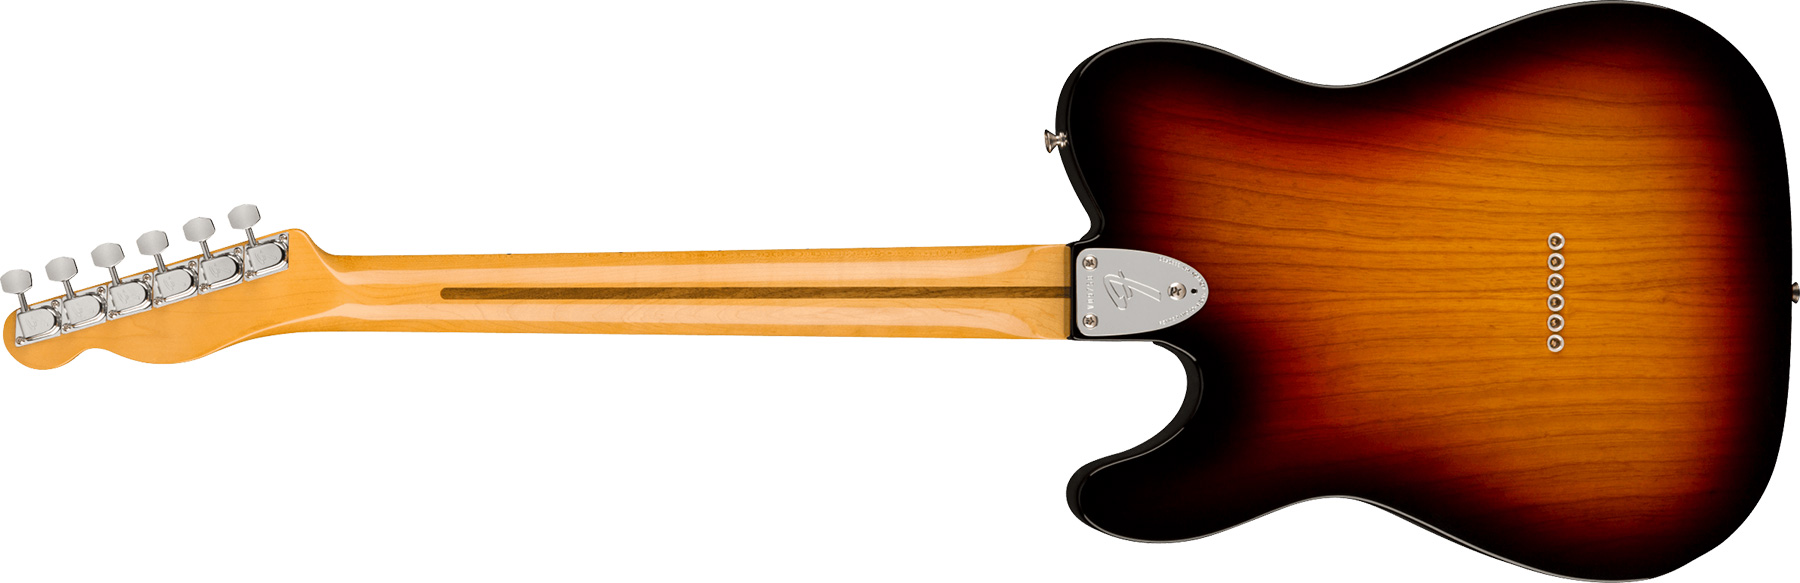 Fender Tele Thinline 1972 American Vintage Ii Usa 2h Ht Mn - 3-color Sunburst - Televorm elektrische gitaar - Variation 1